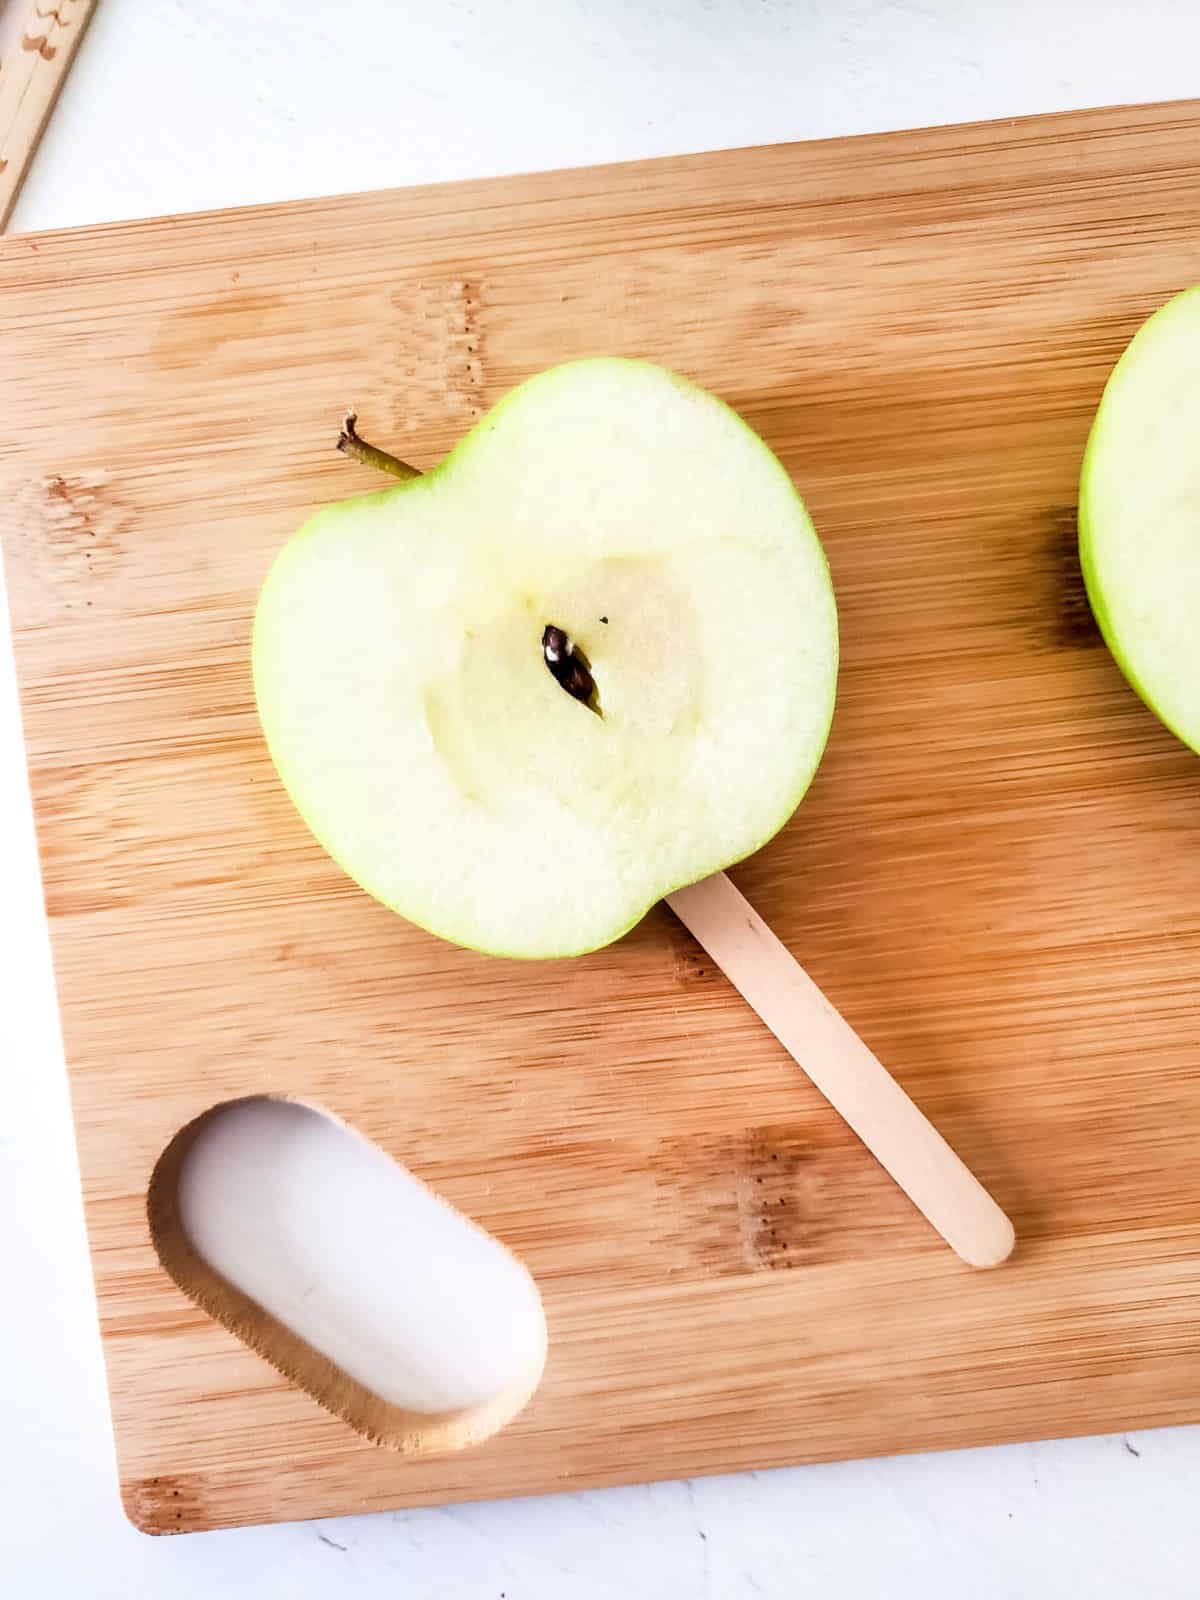 Single apple slice on a stick on a wooden board.